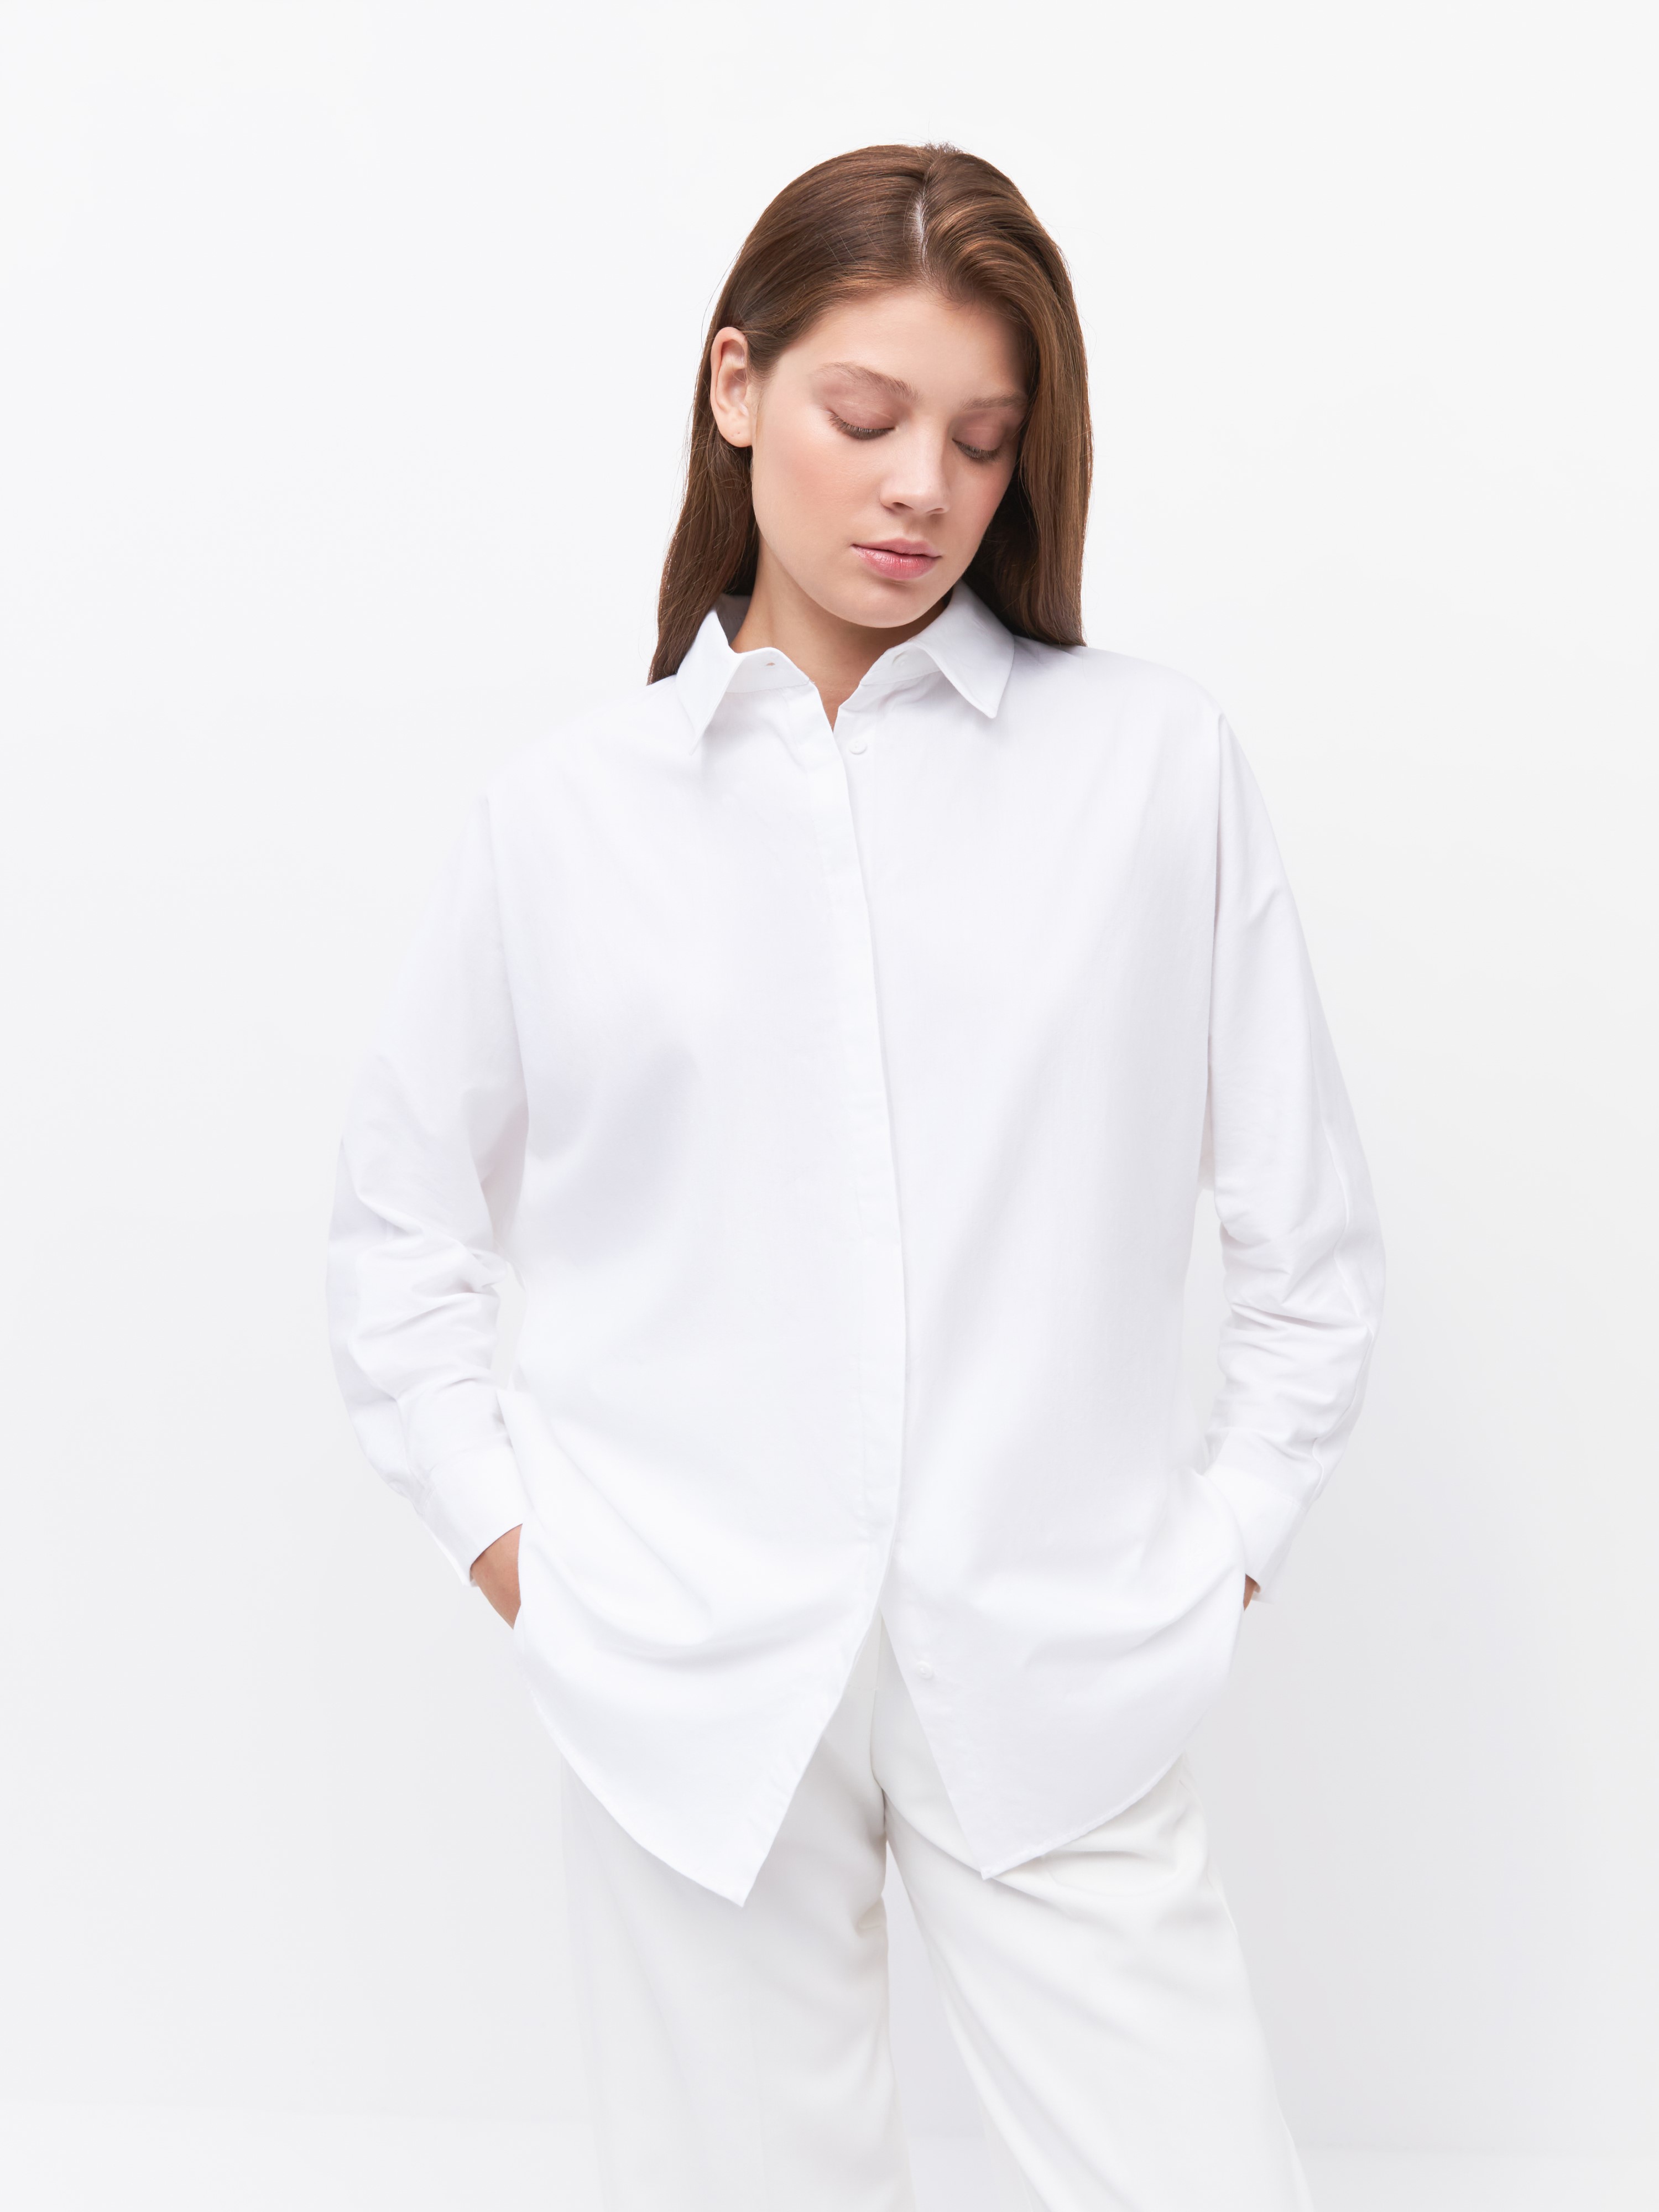 Рубашка женская Arive ARV-WS-10521-007 белая, размер S